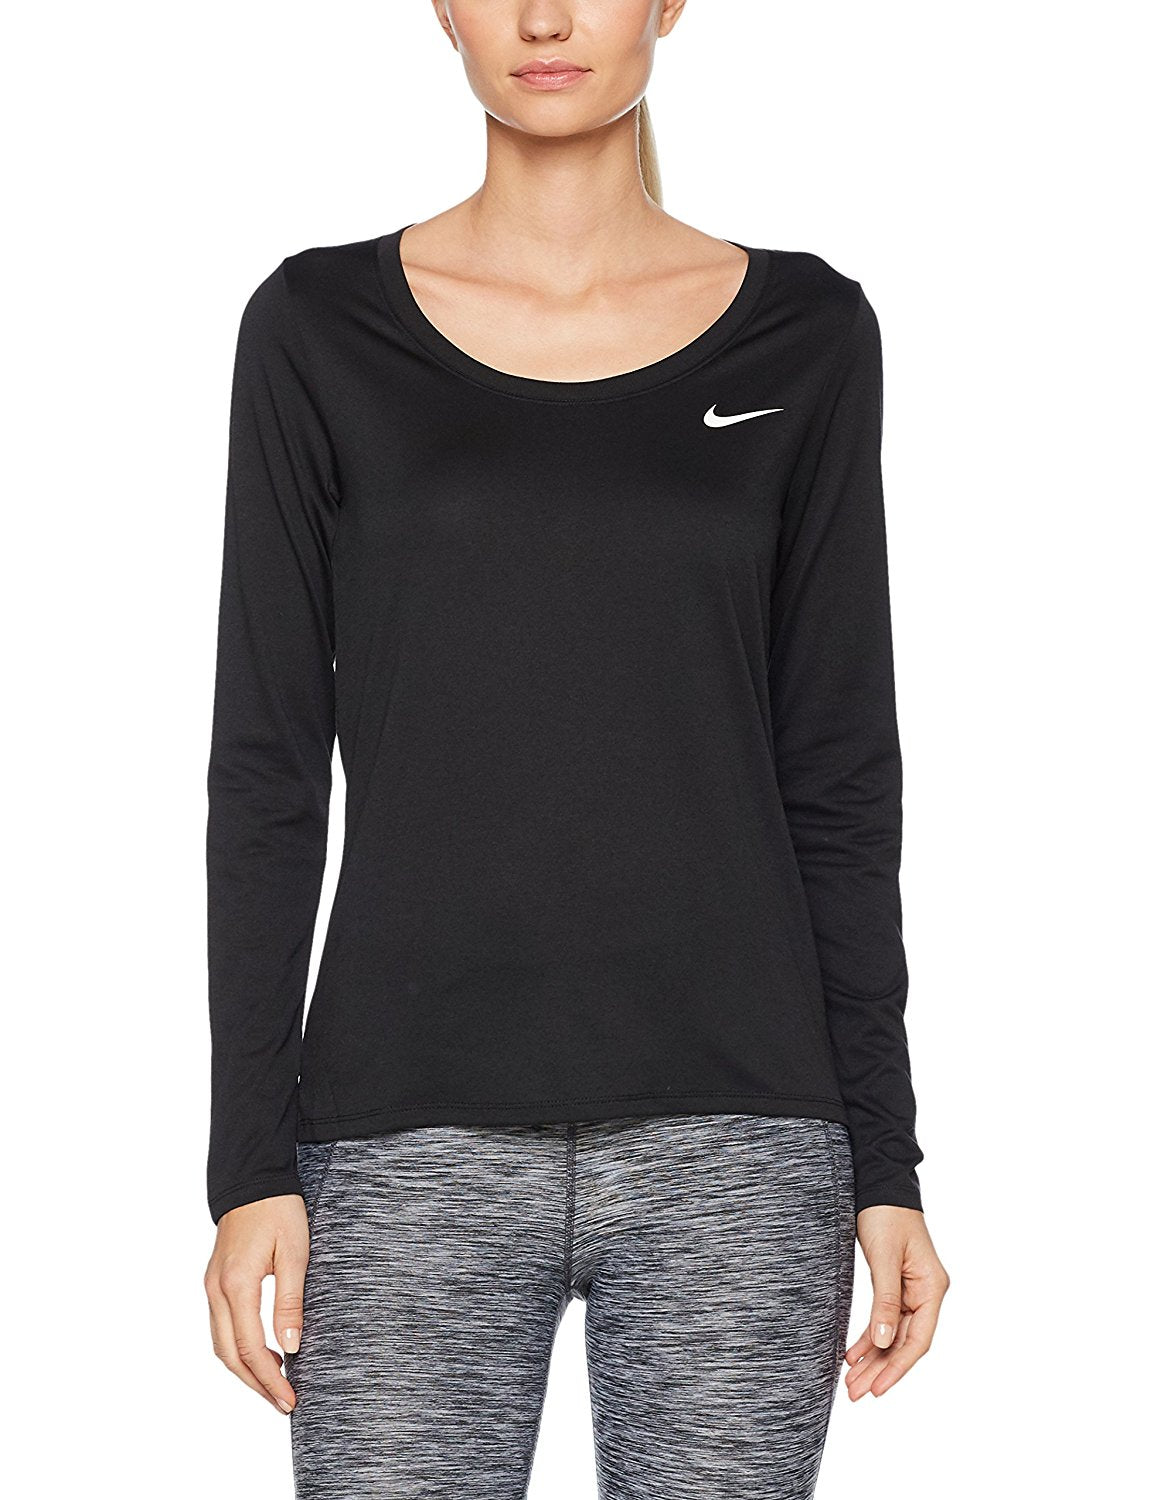 Nike Womens Dry Legend Long Sleeve Training Top